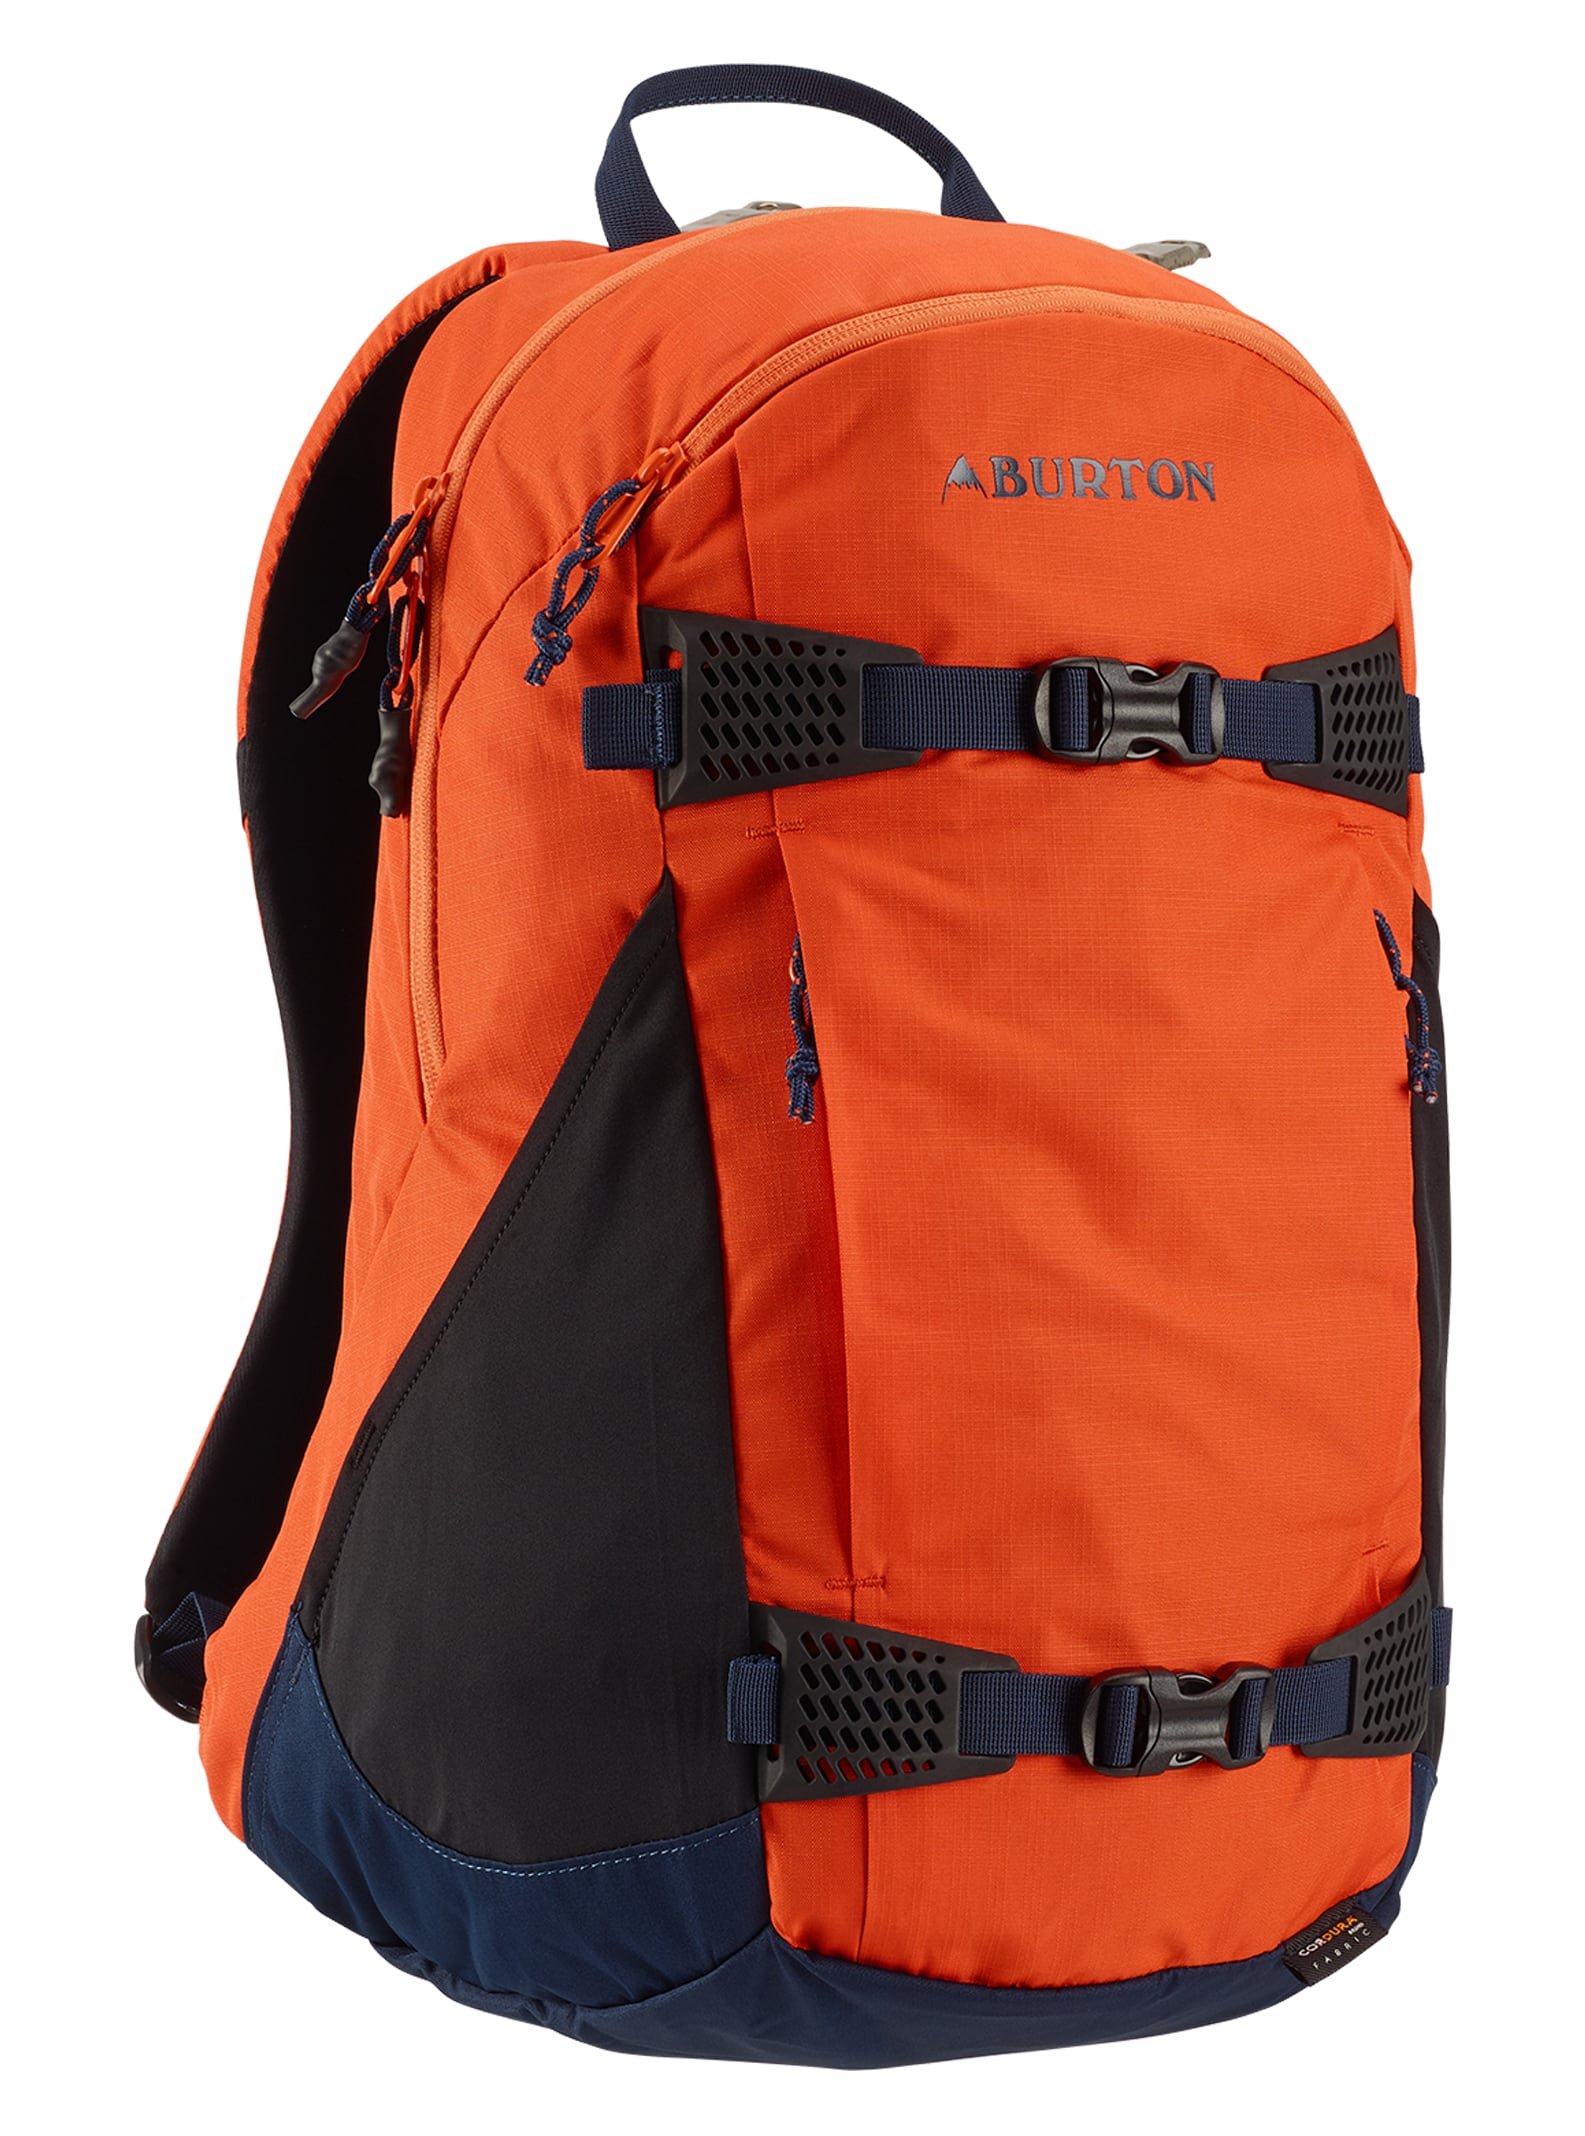 Burton Day Hiker 25L Backpack | Burton.com Spring 2020 US